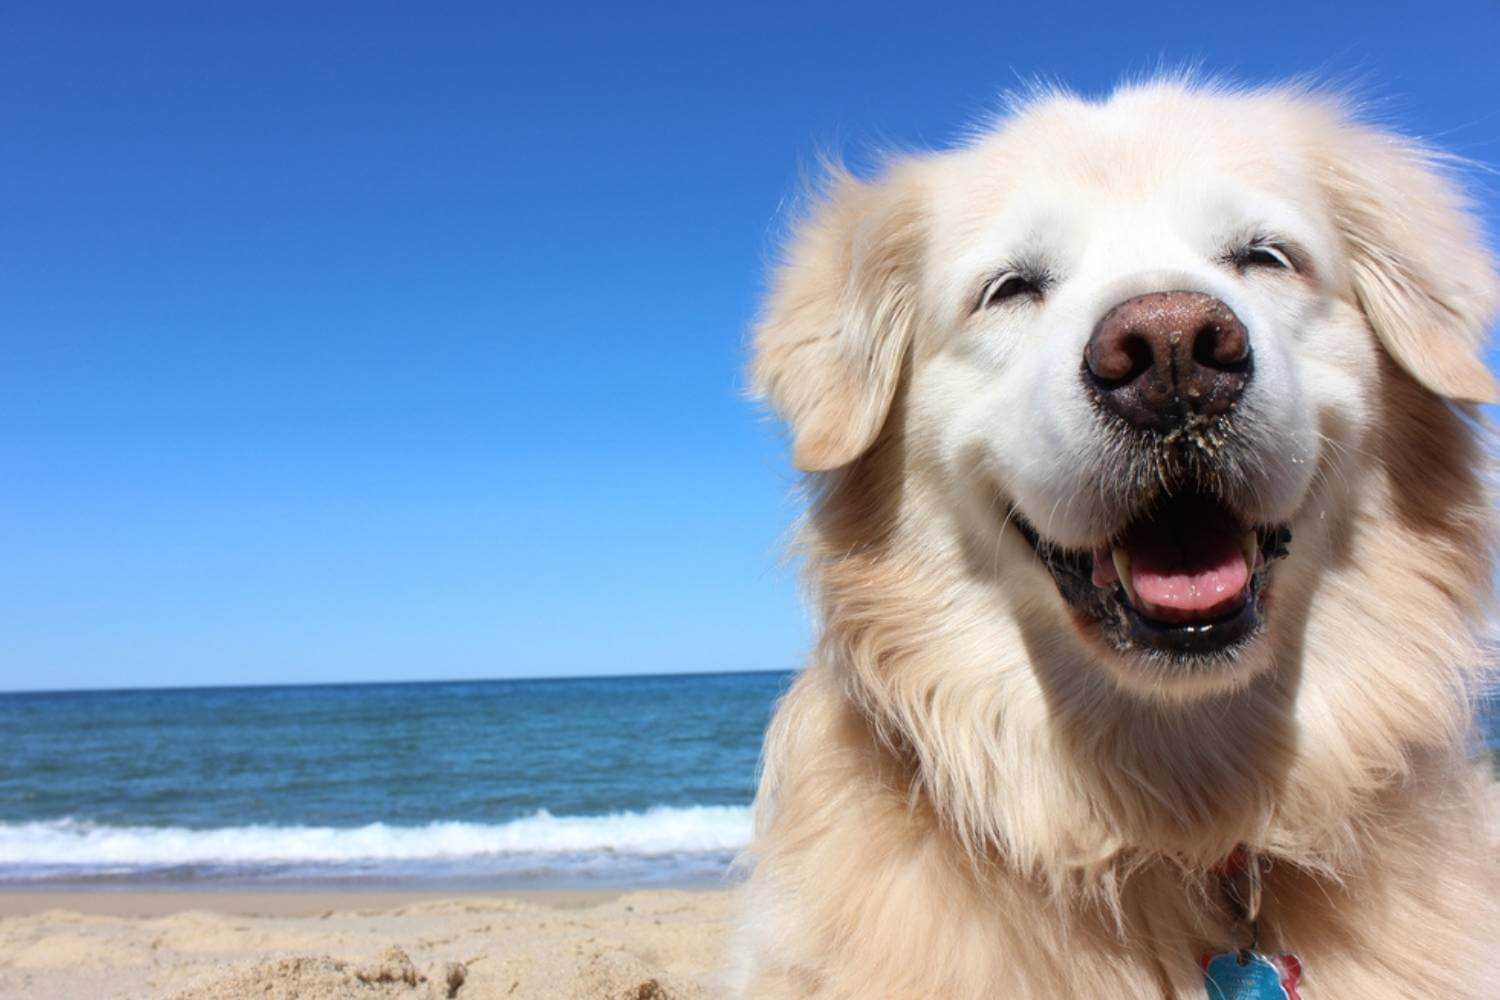 Tampa FL Dog Smiling on Beach